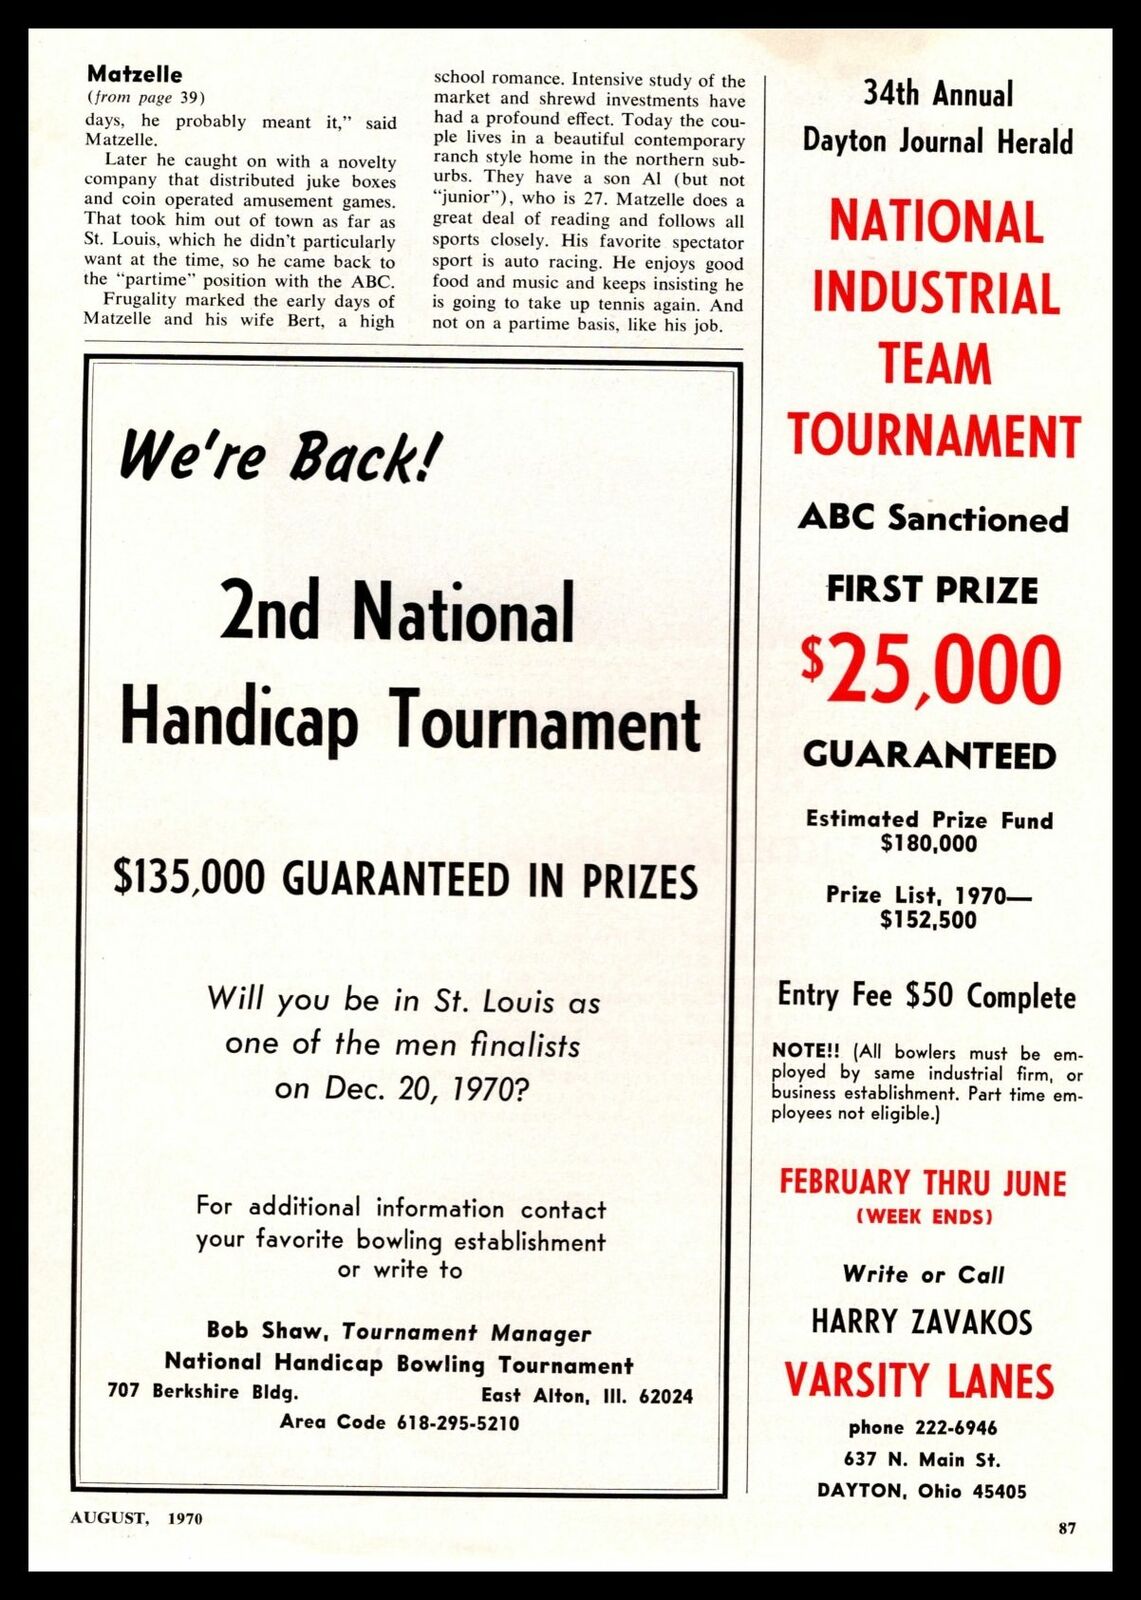 1970 Handicap Bowling Tournament East Alton IL Varsity Lanes Dayton OH Print Ad